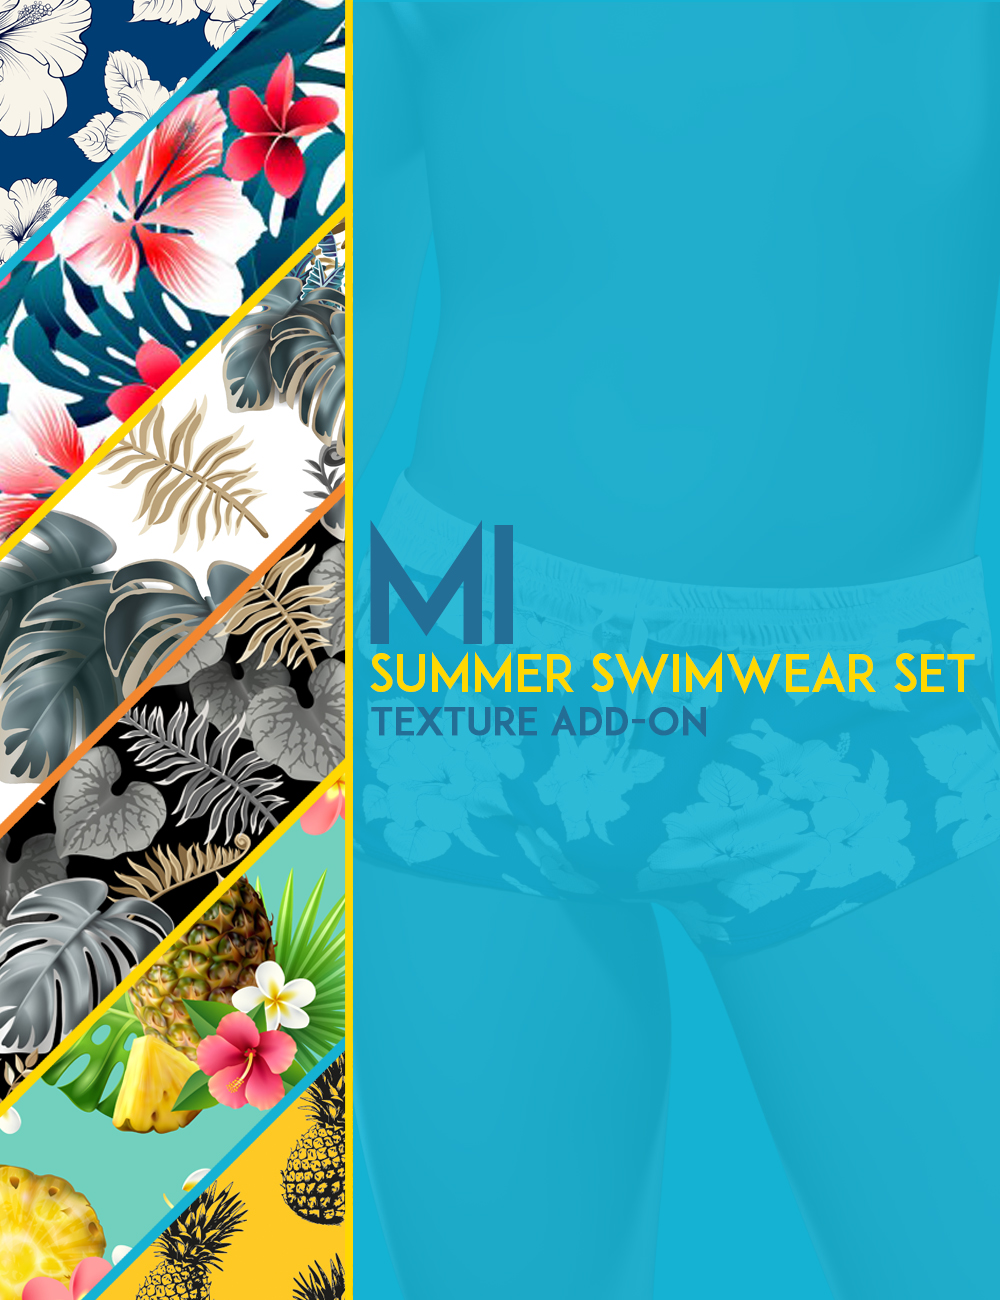 MI Summer Swimwear Set Texture Add-on by: mal3Imagery, 3D Models by Daz 3D